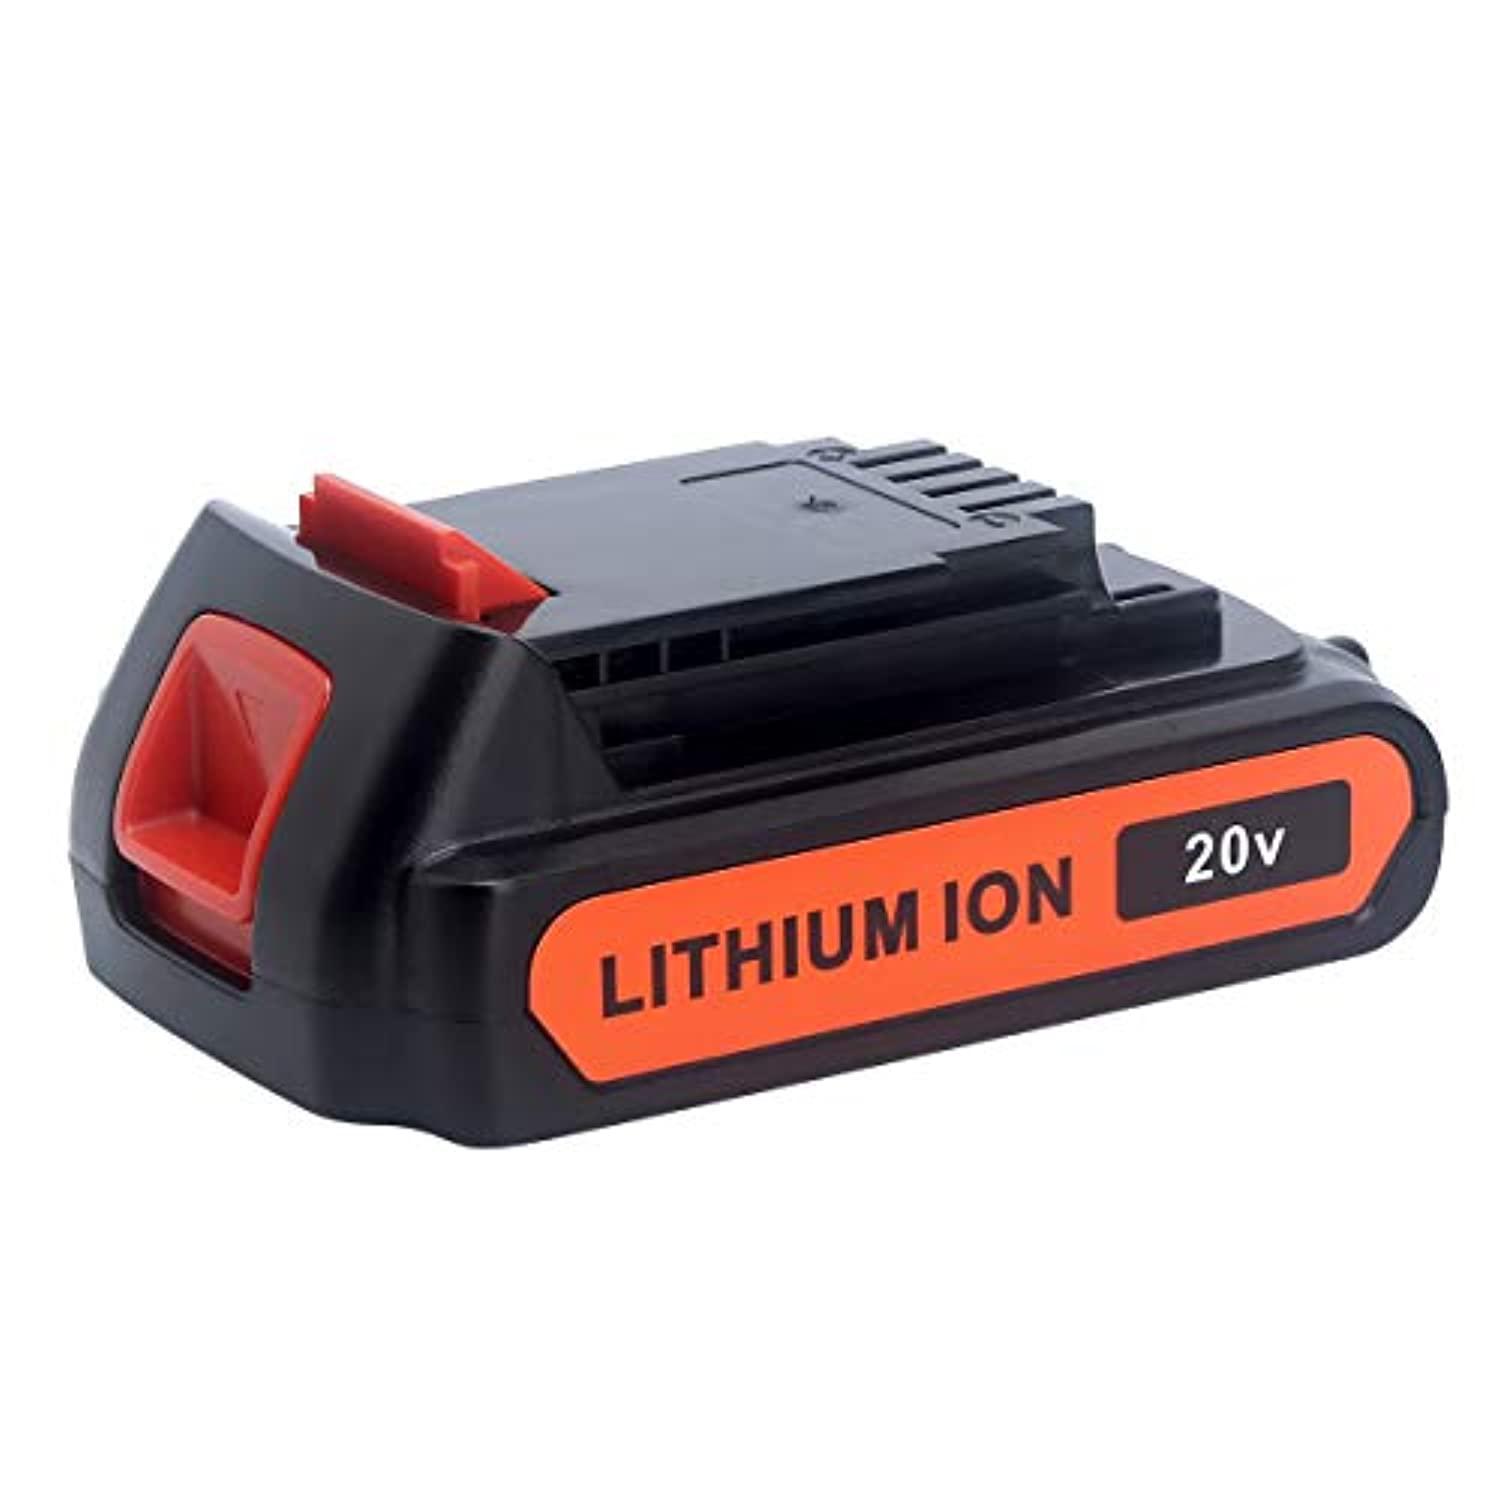 biswaye 20v lithium battery 3.0ah lbxr20 replacement for black & decker 20-volt max cordless tool lcc221 lst522 lst201 batter